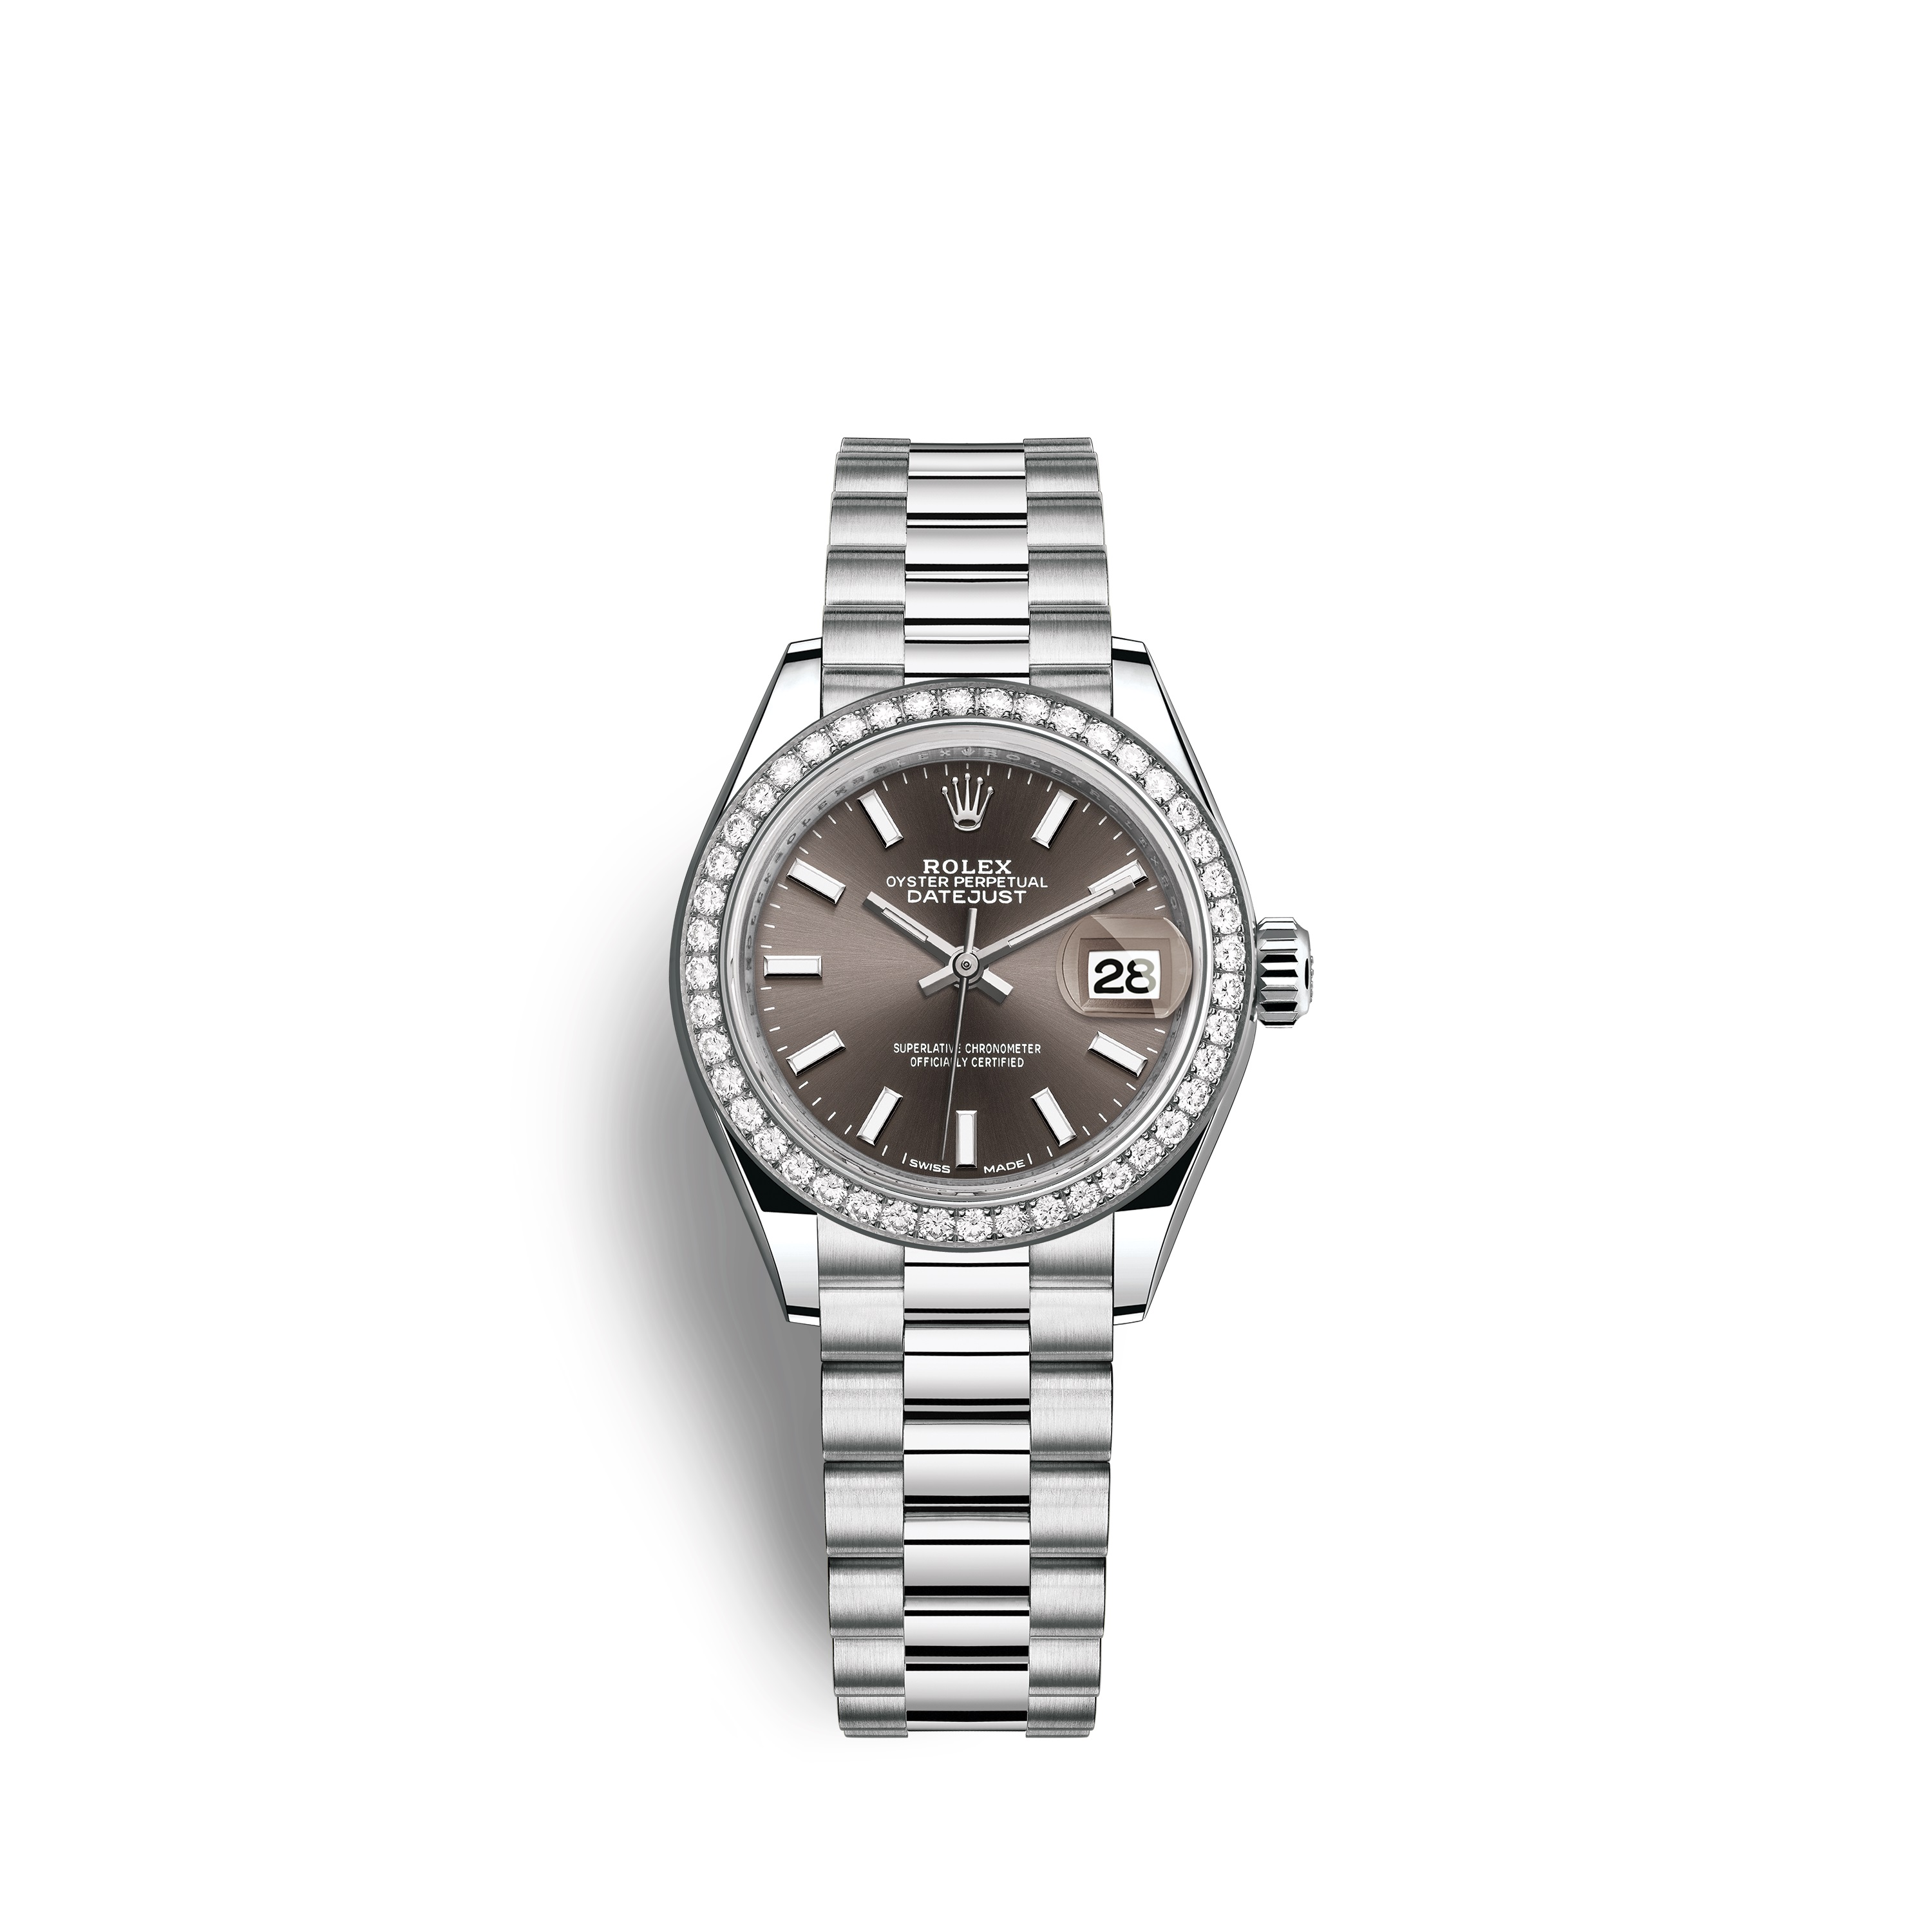 Lady-Datejust 28 279136RBR Platinum & Diamonds Watch (Dark Grey)